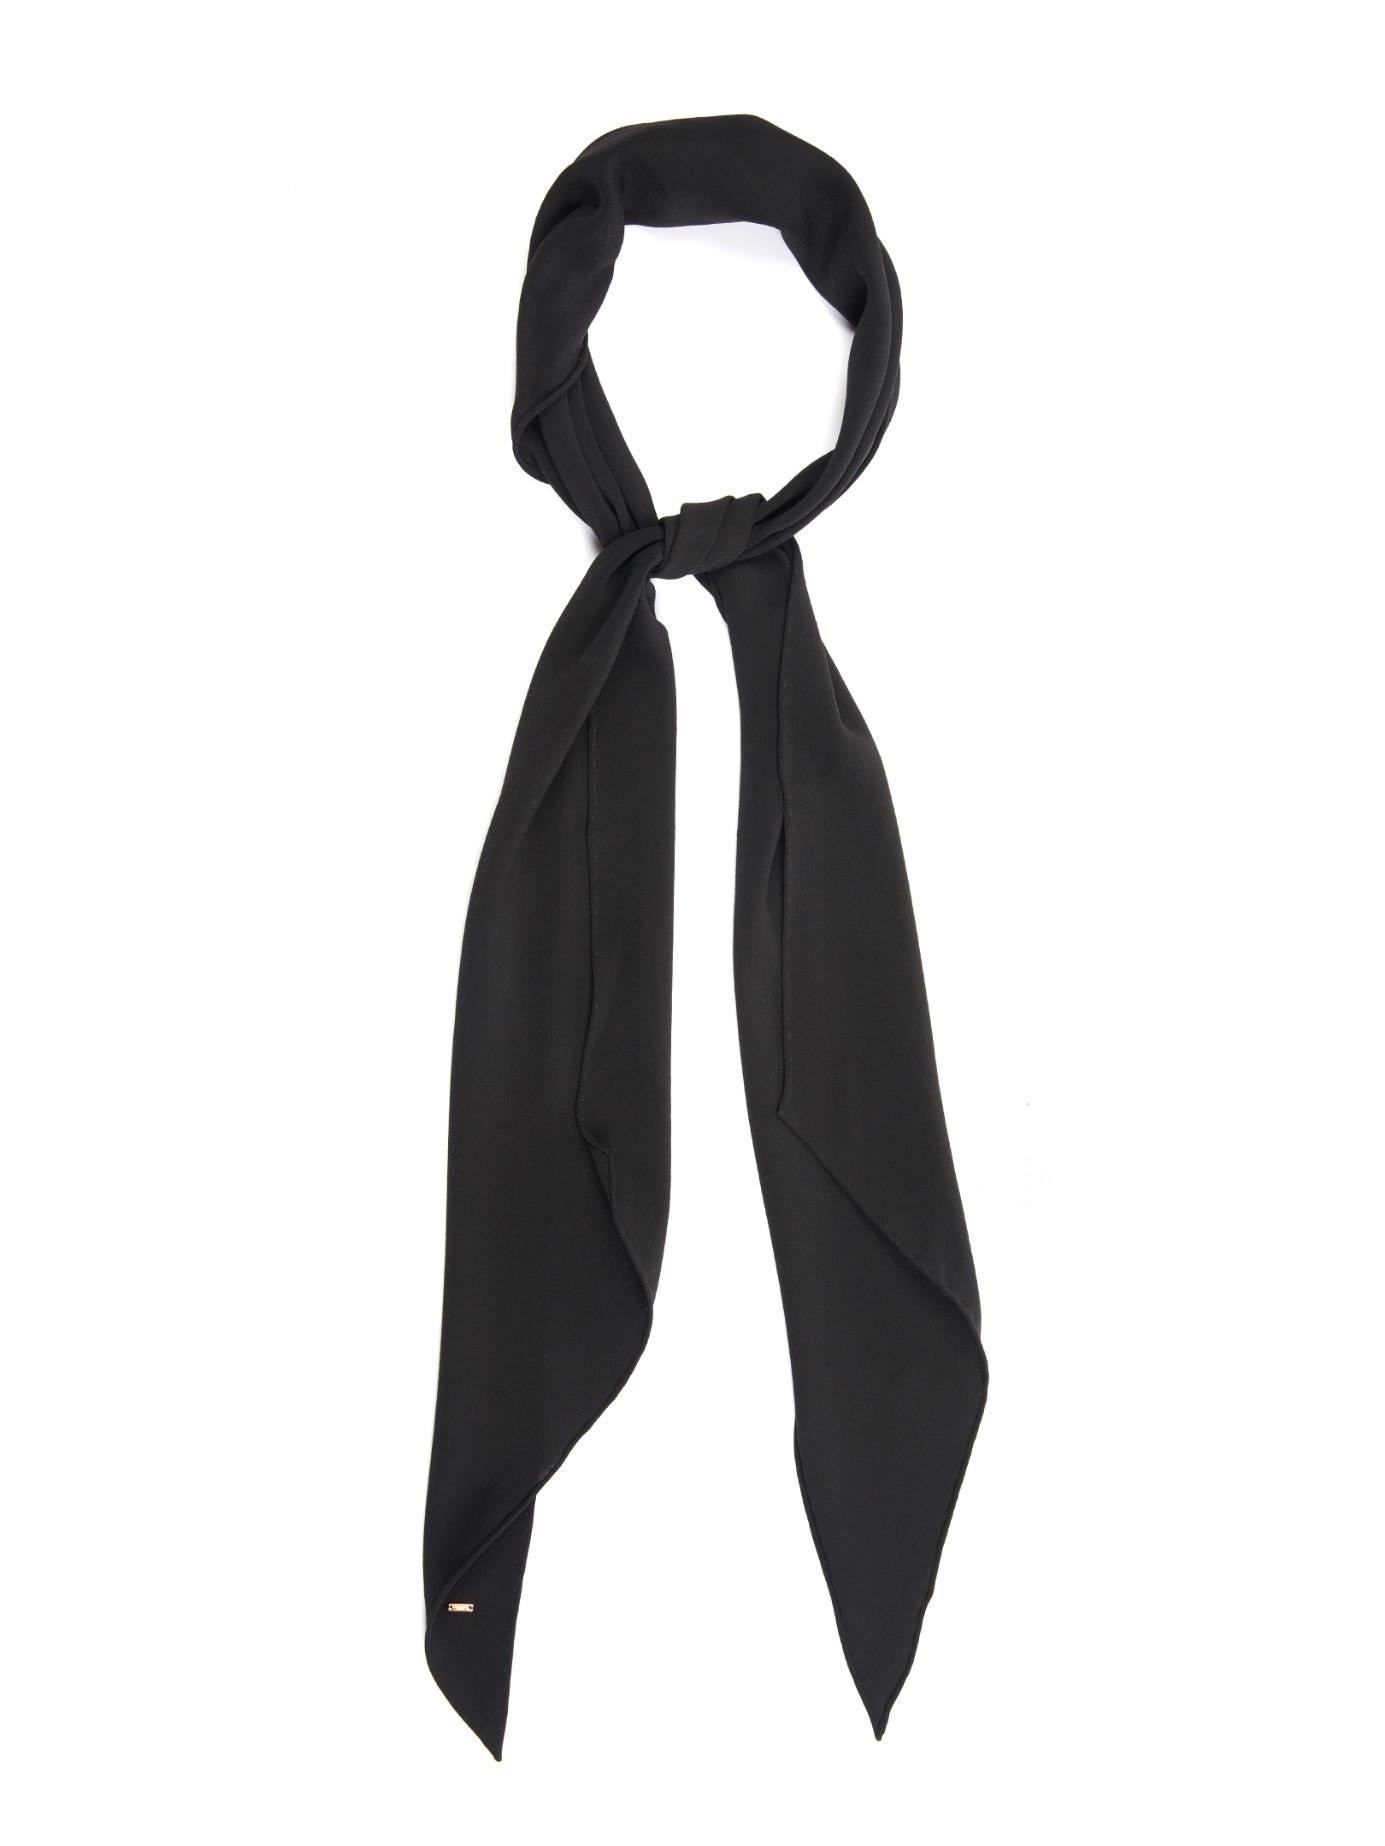 Saint Laurent Silk-crepe Scarf in Black | Lyst